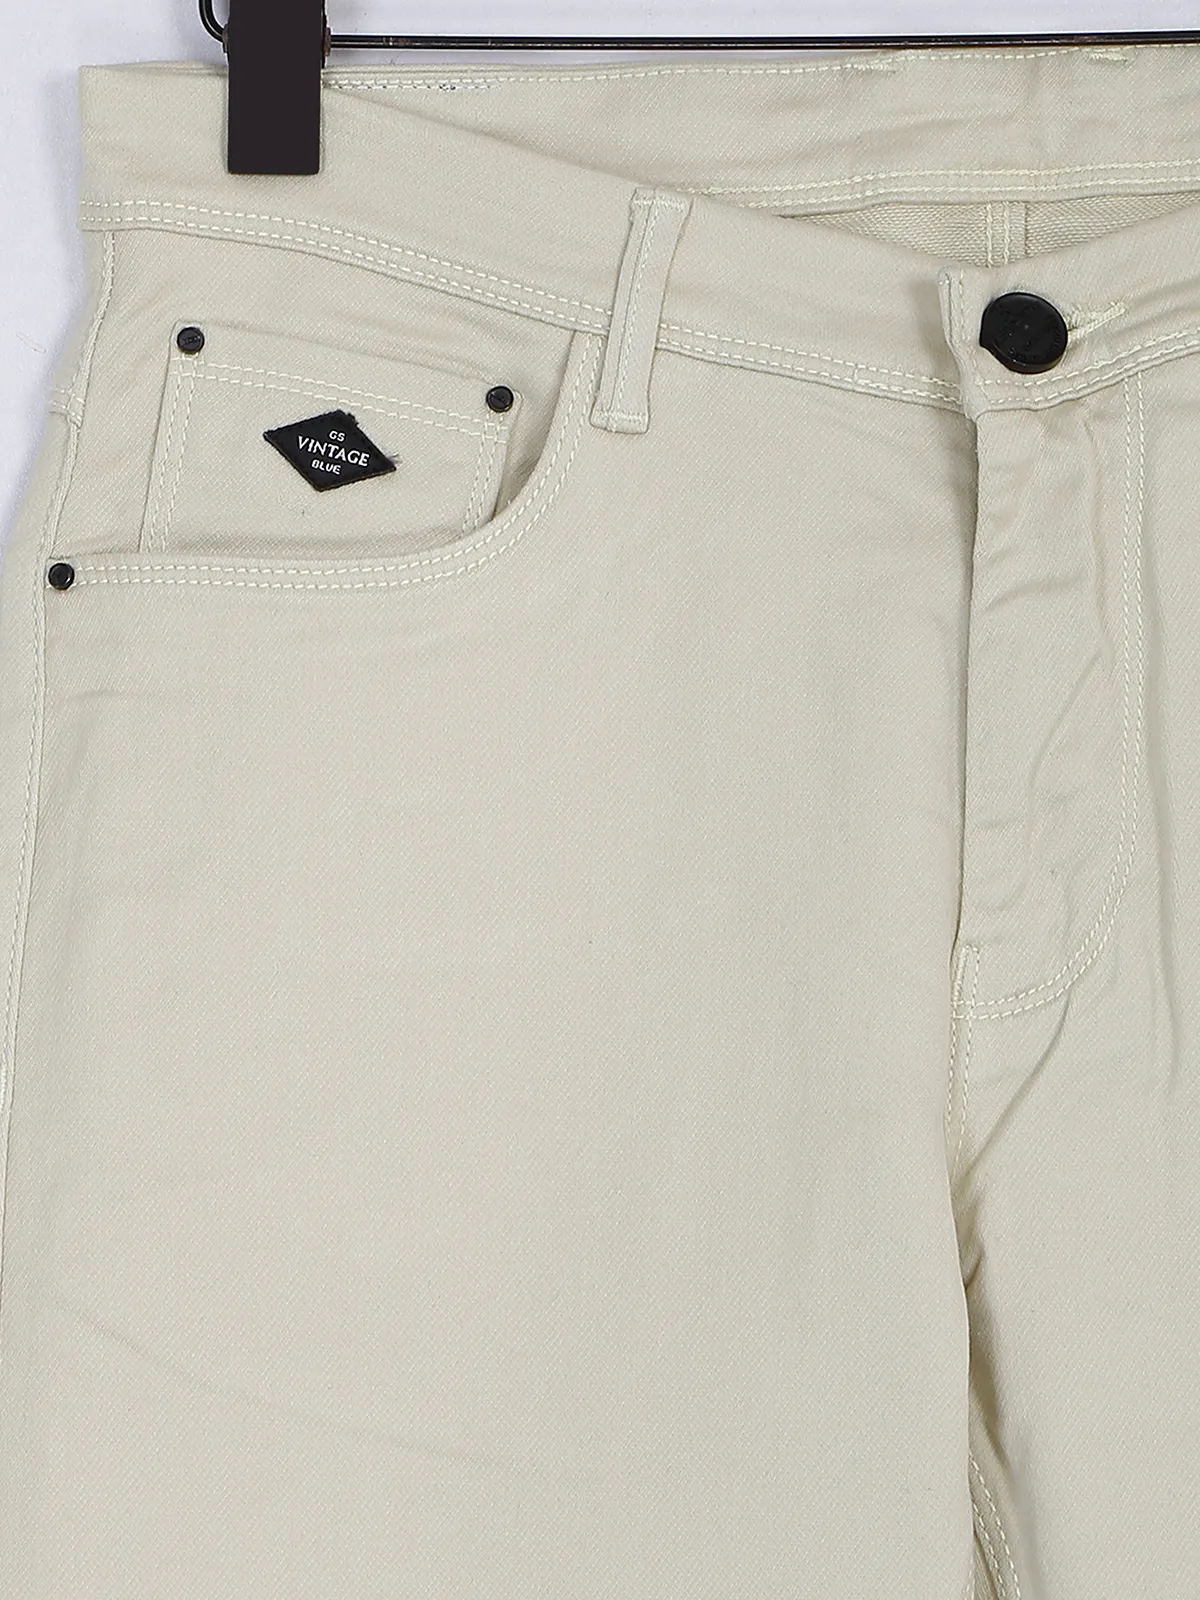 GS78 trendy cream slim fit jeans